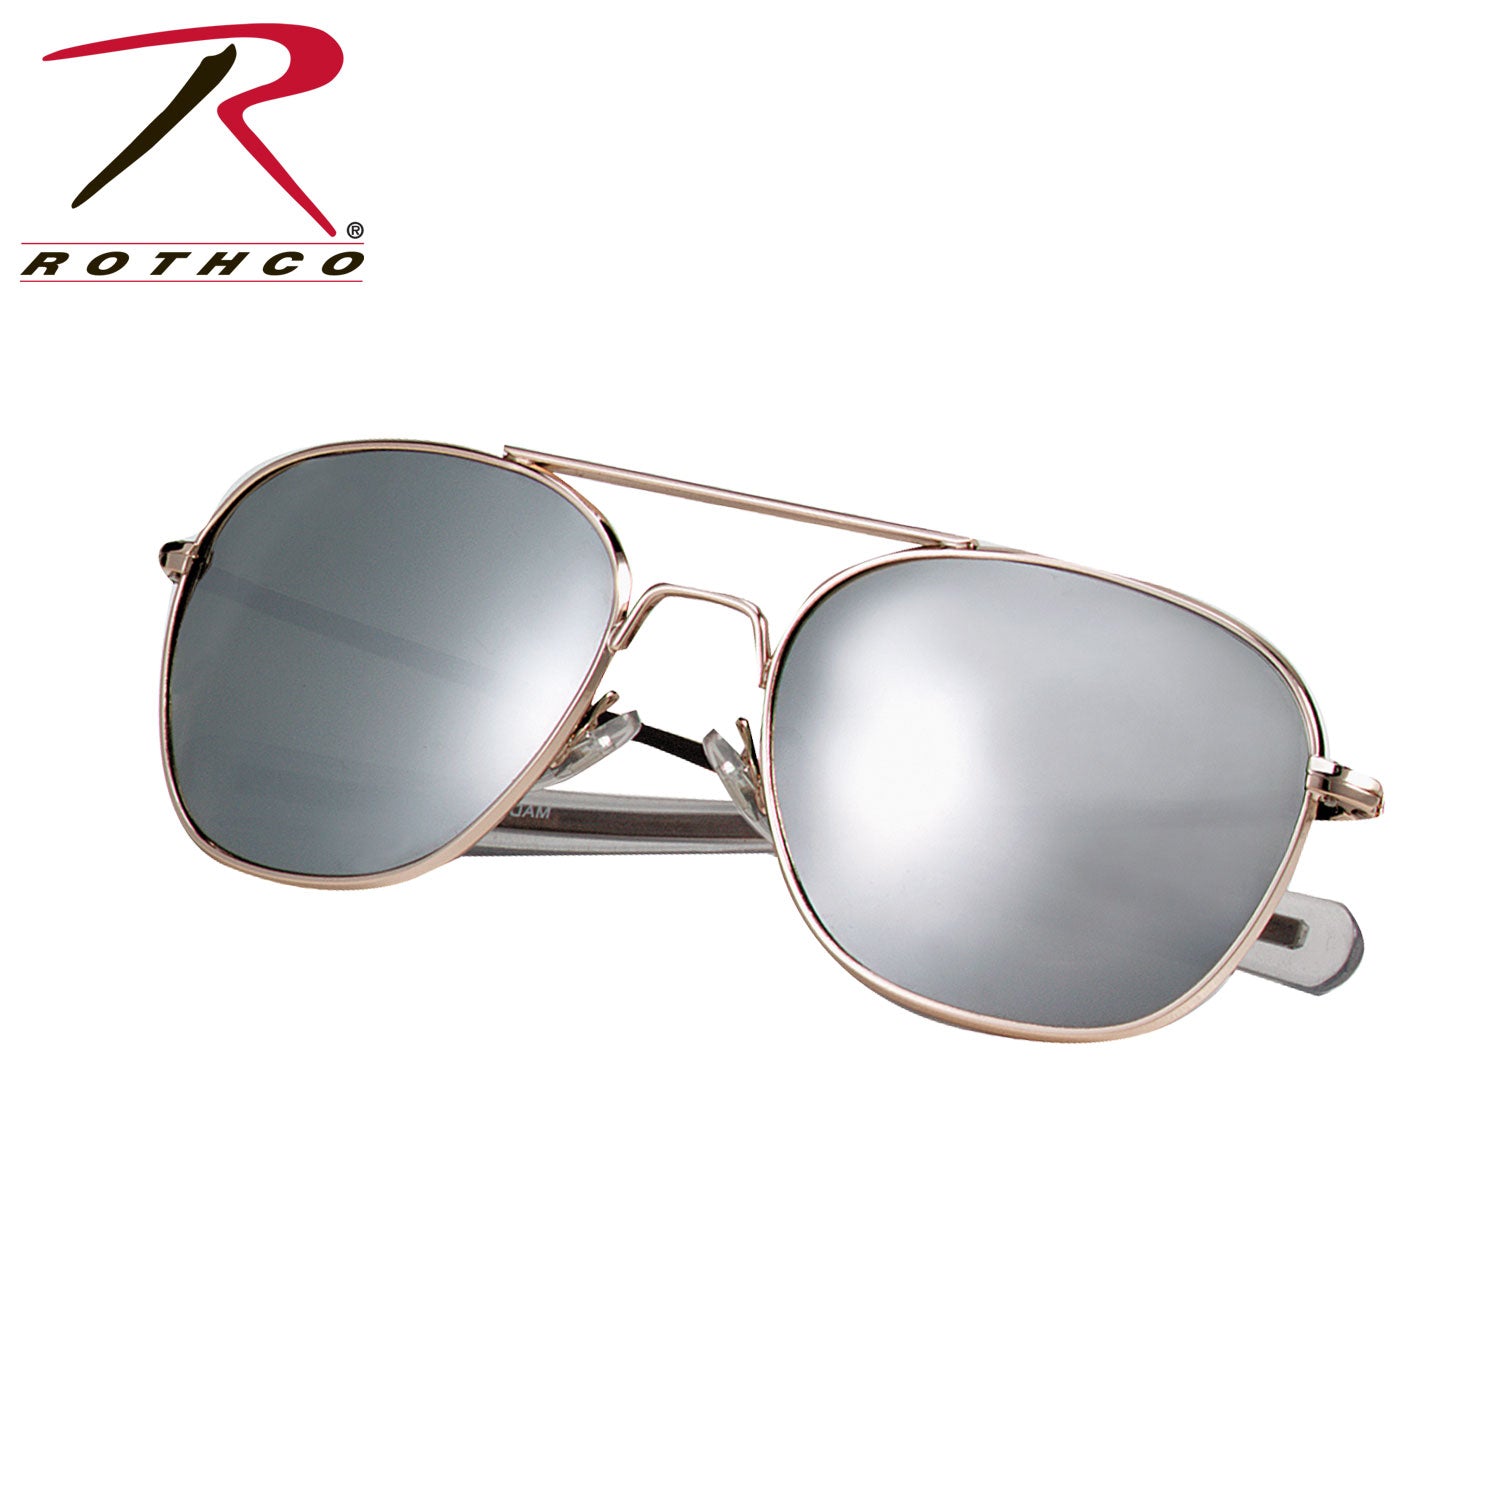 Rothco G.I. Type Aviator Sunglasses - Tactical Choice Plus